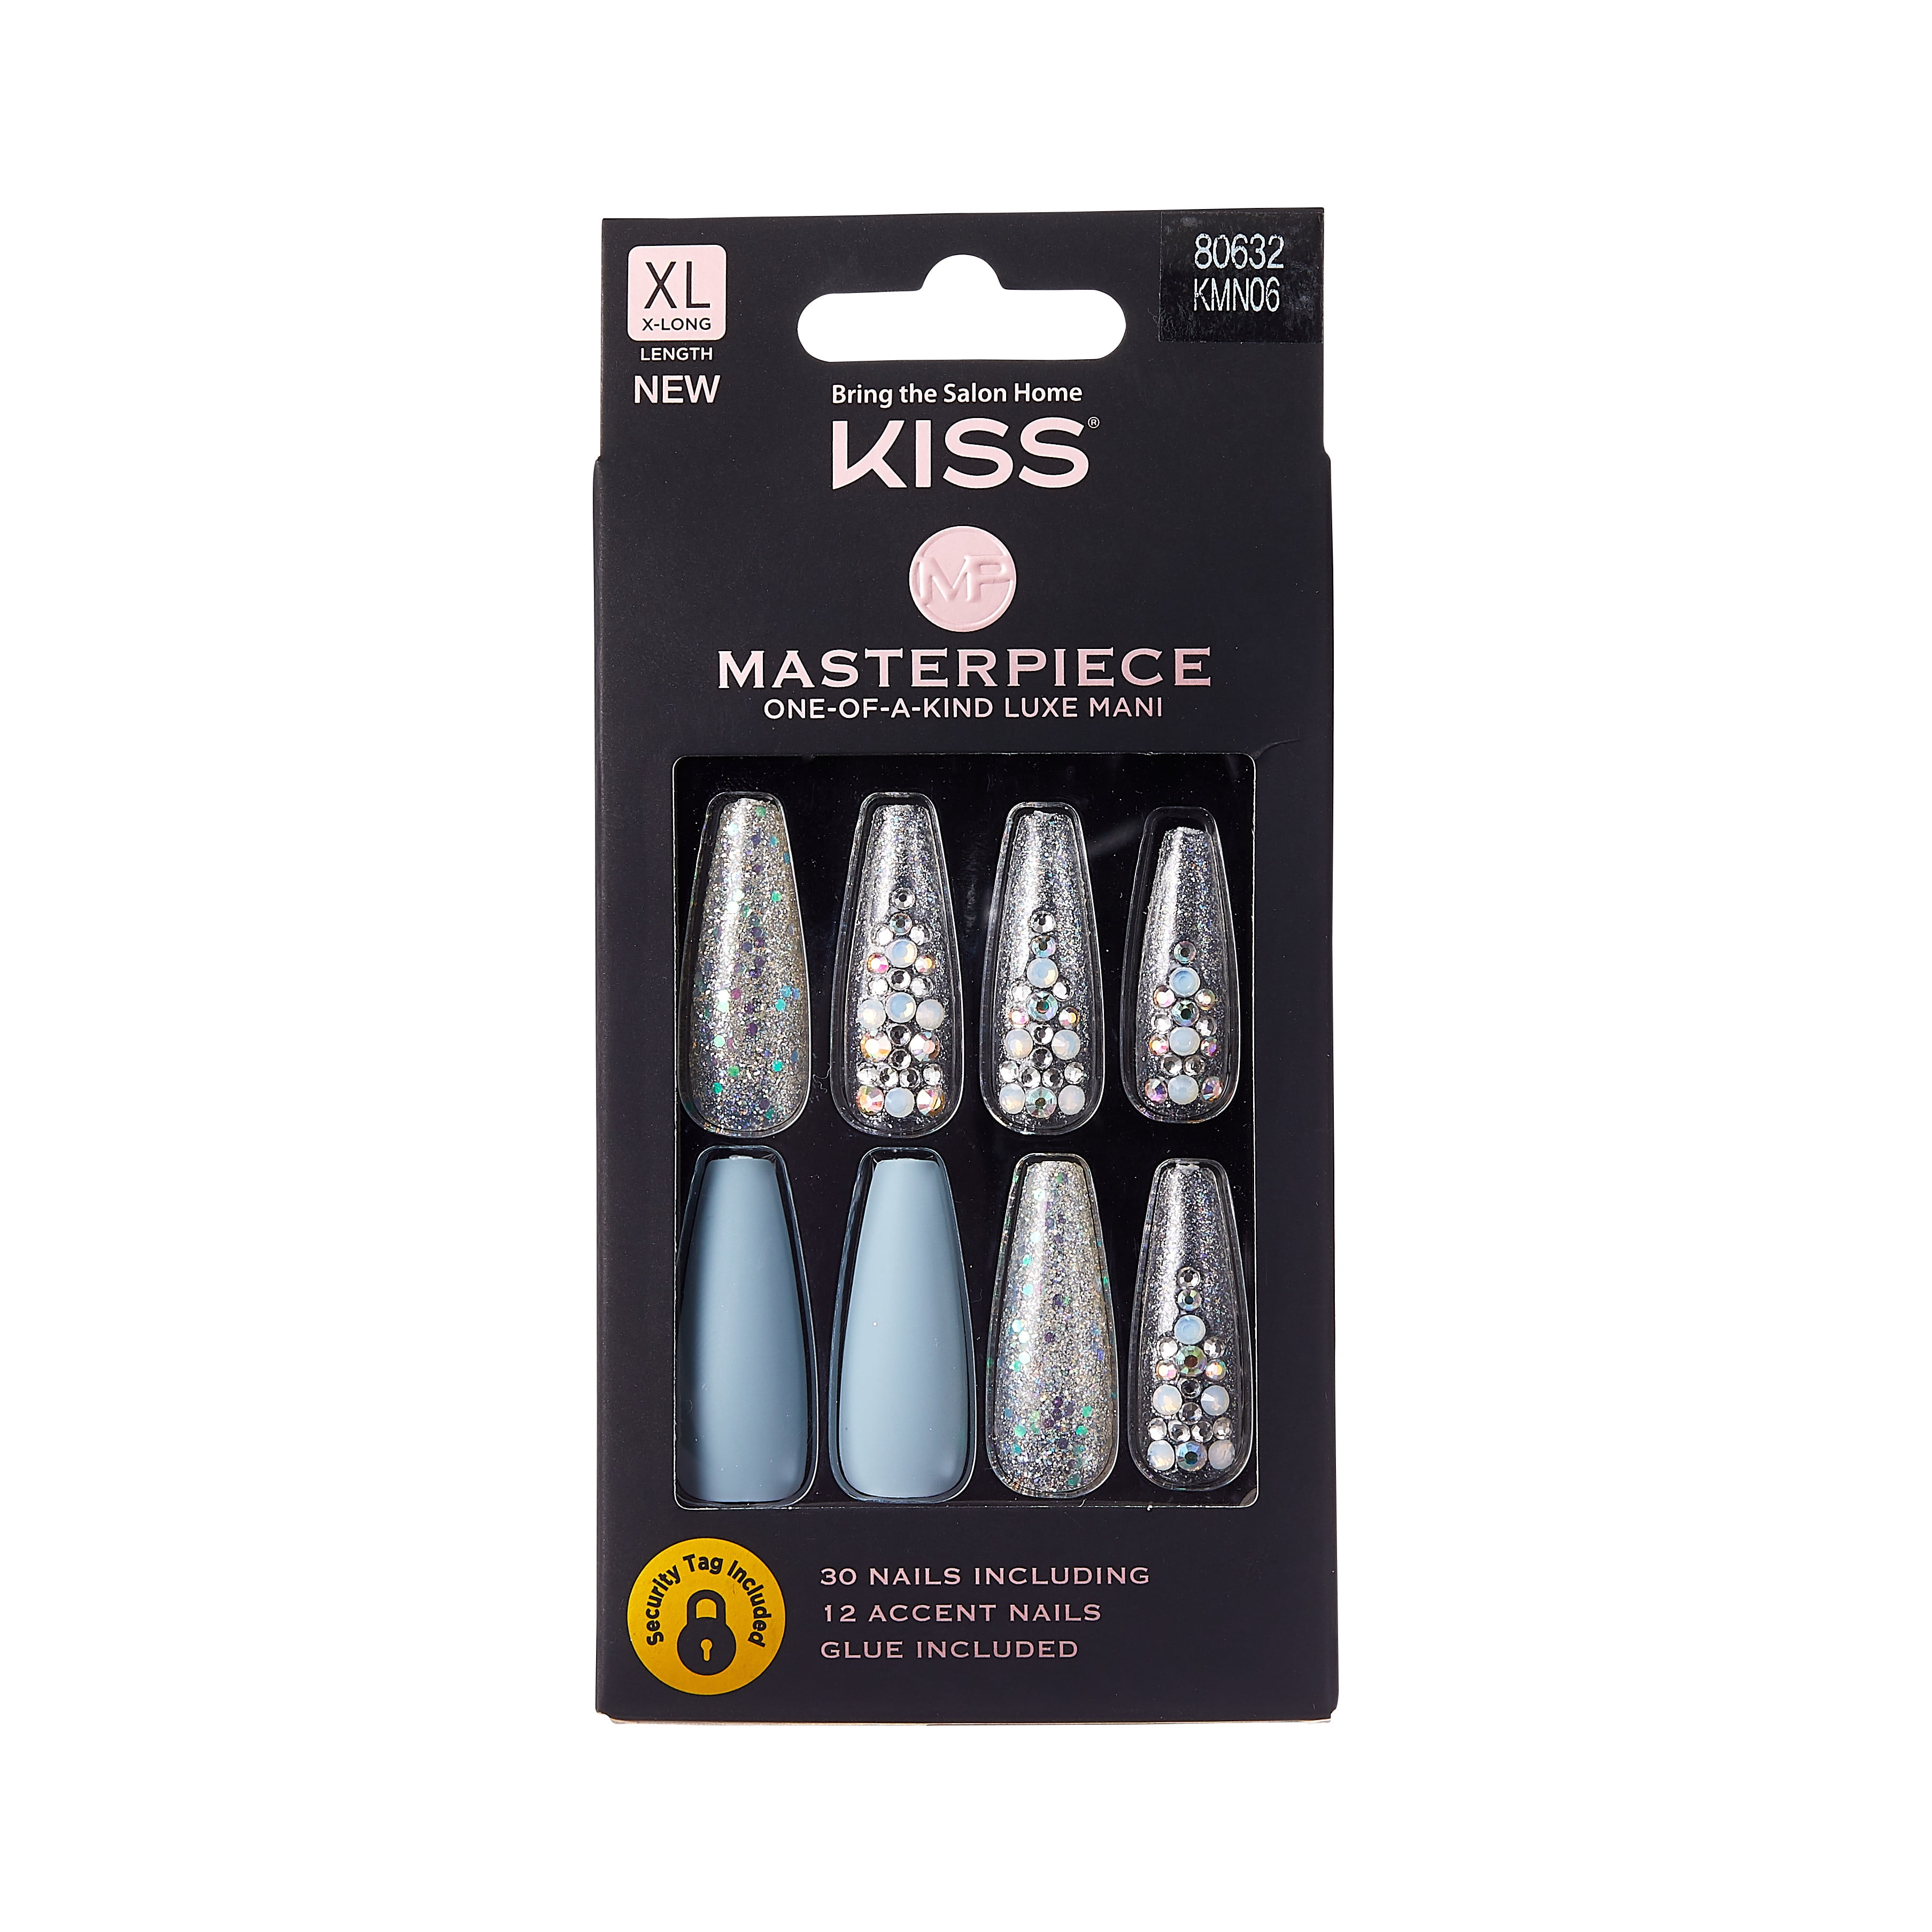 KISS Masterpiece XL Nails - EXTRAVAGANT - Walmart.com